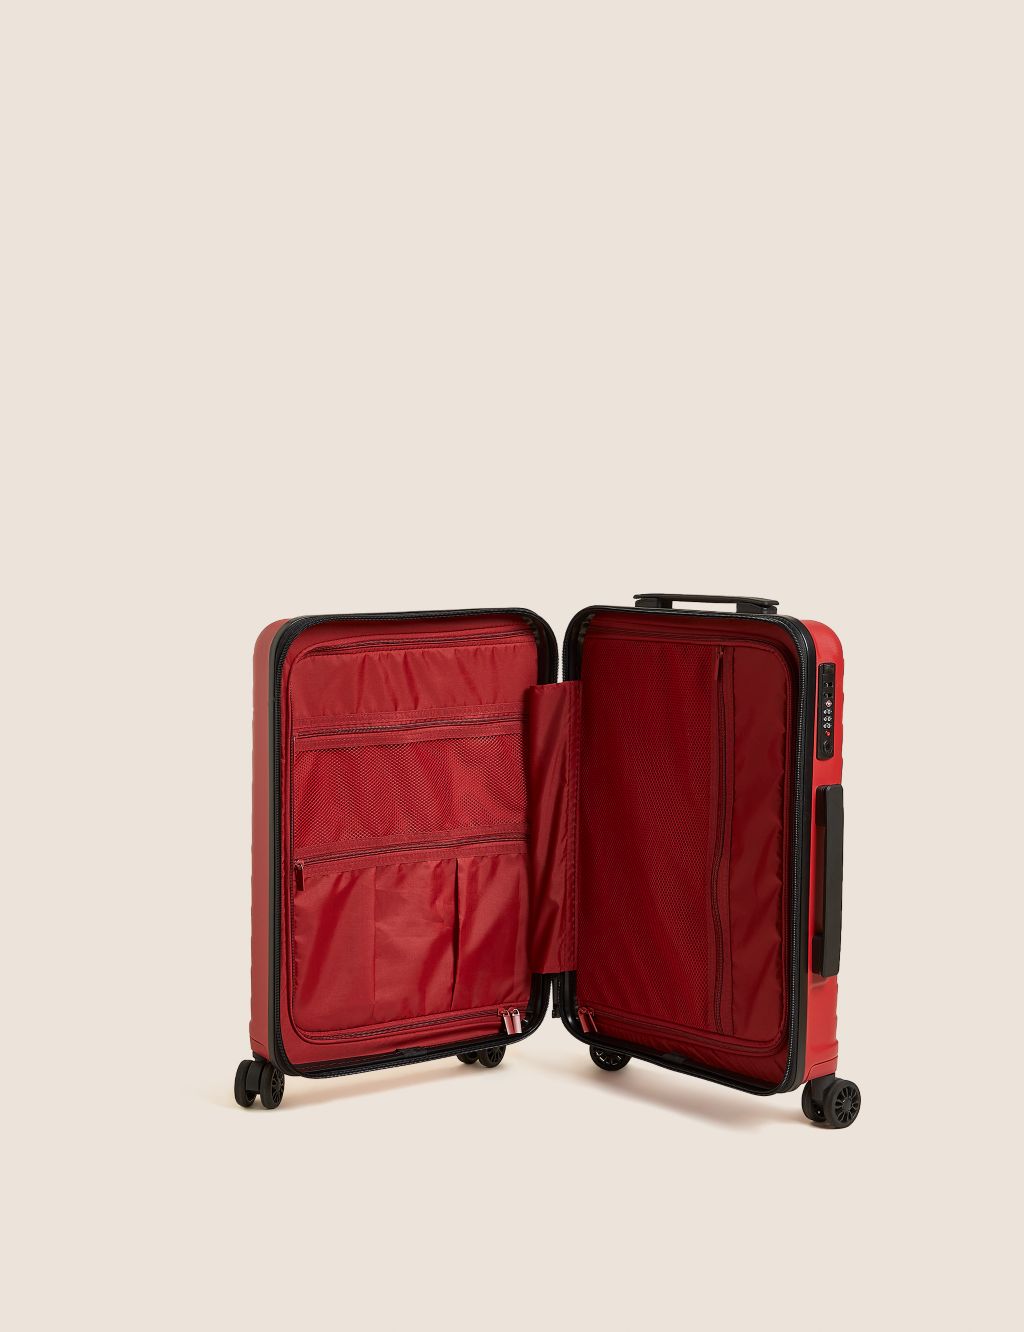 Oslo 4 Wheel Hard Shell Cabin Suitcase image 6